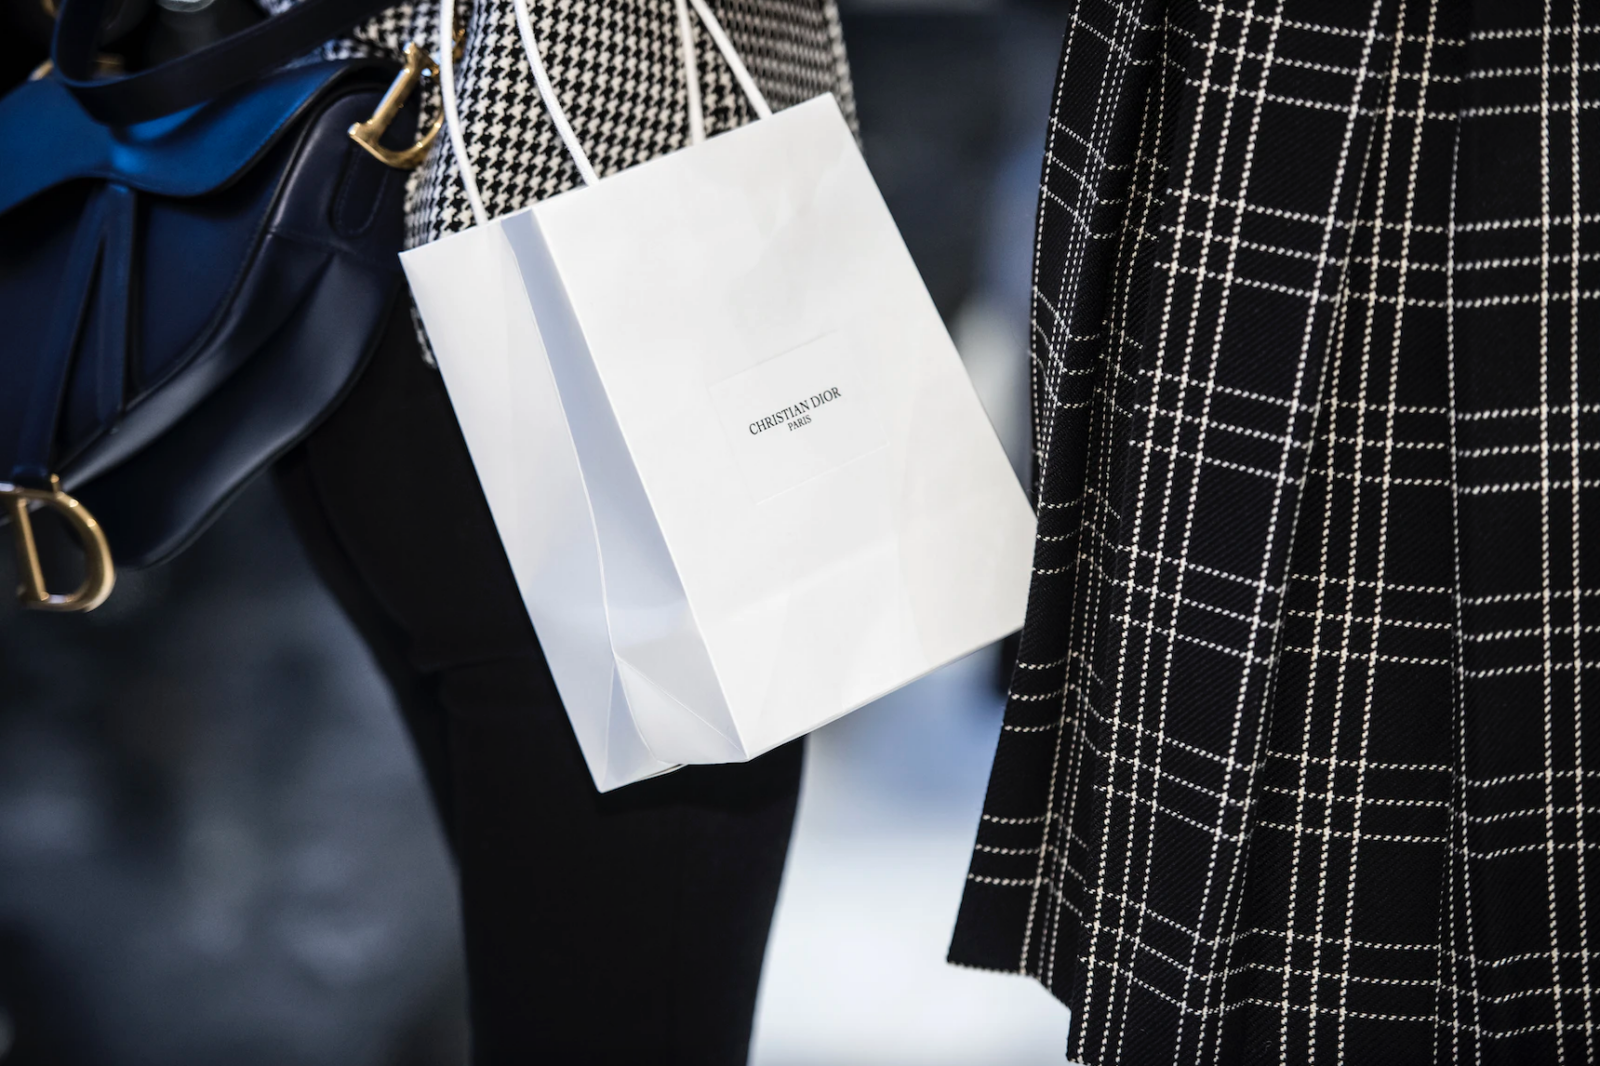 A shopping bag that says Christian Dior